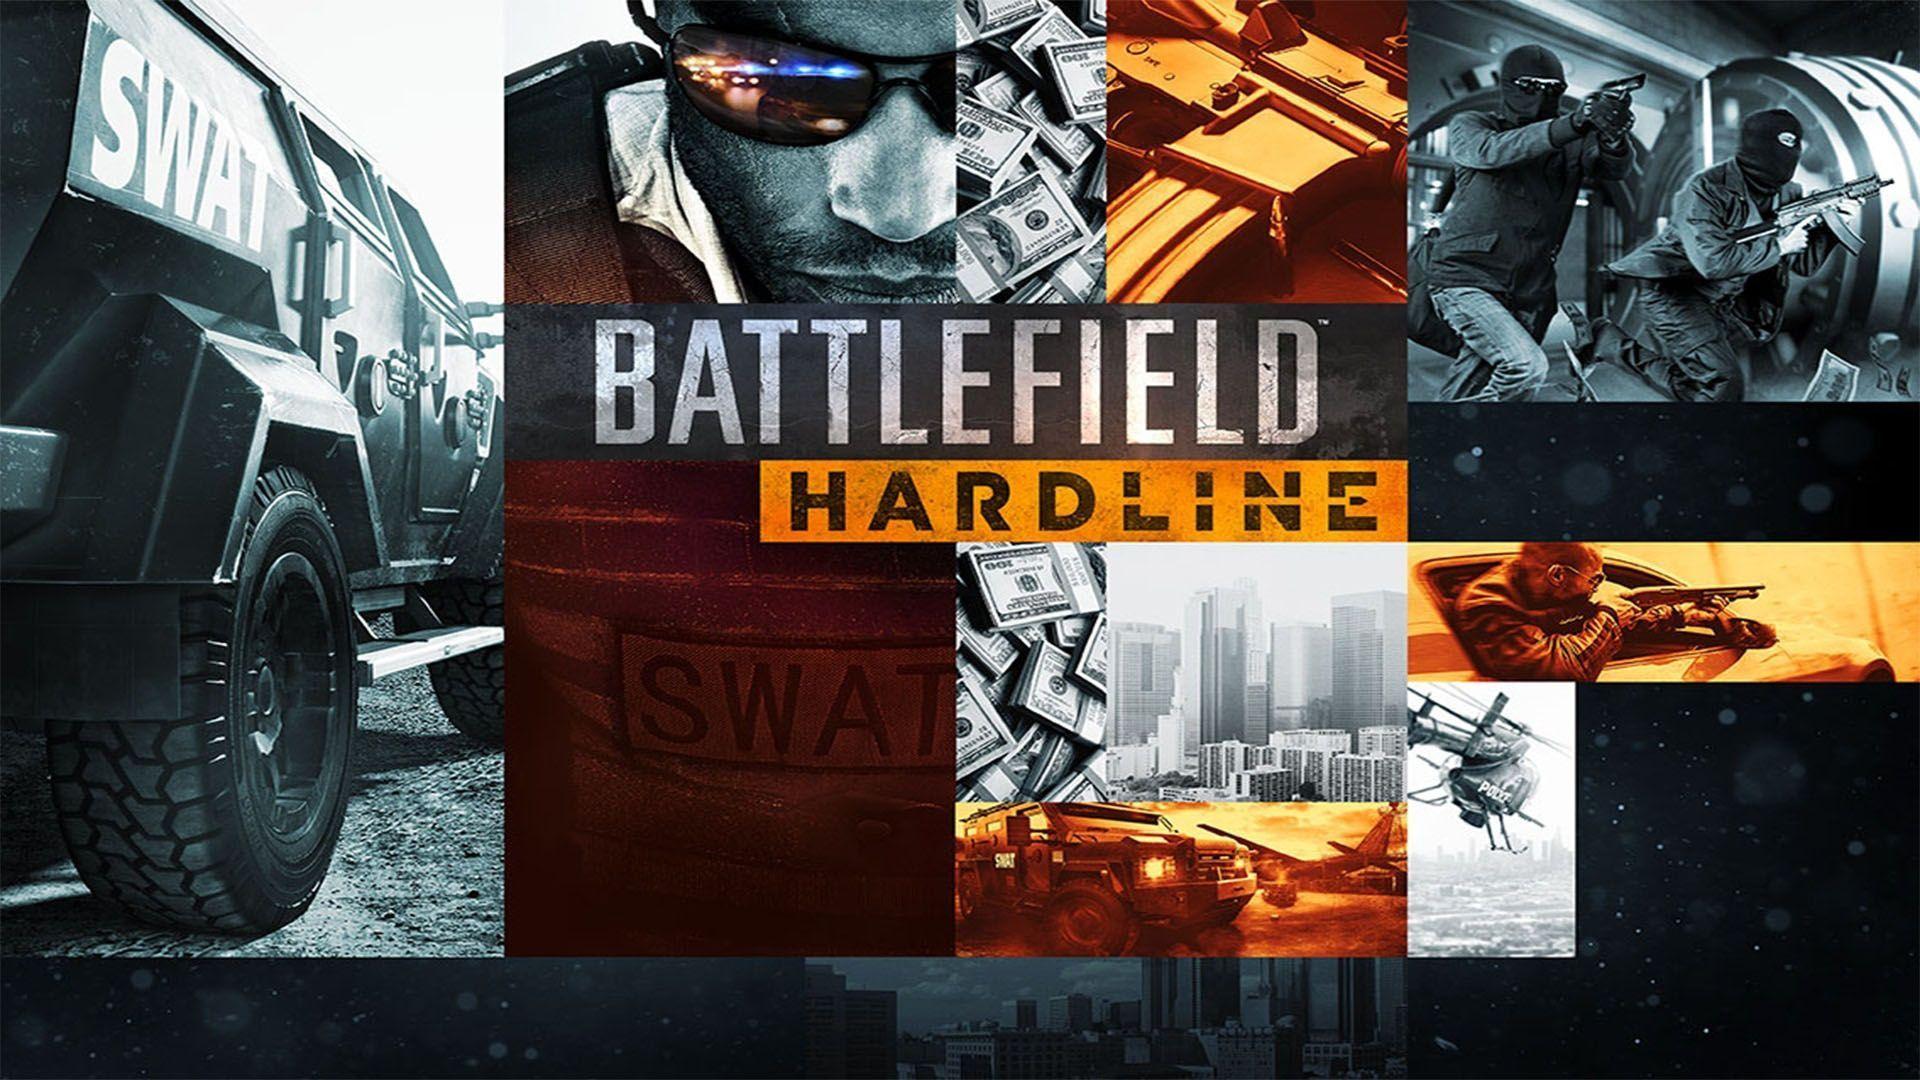 Hardline: Reality Battlefield Hardline Picture for PC & Mac, Tablet